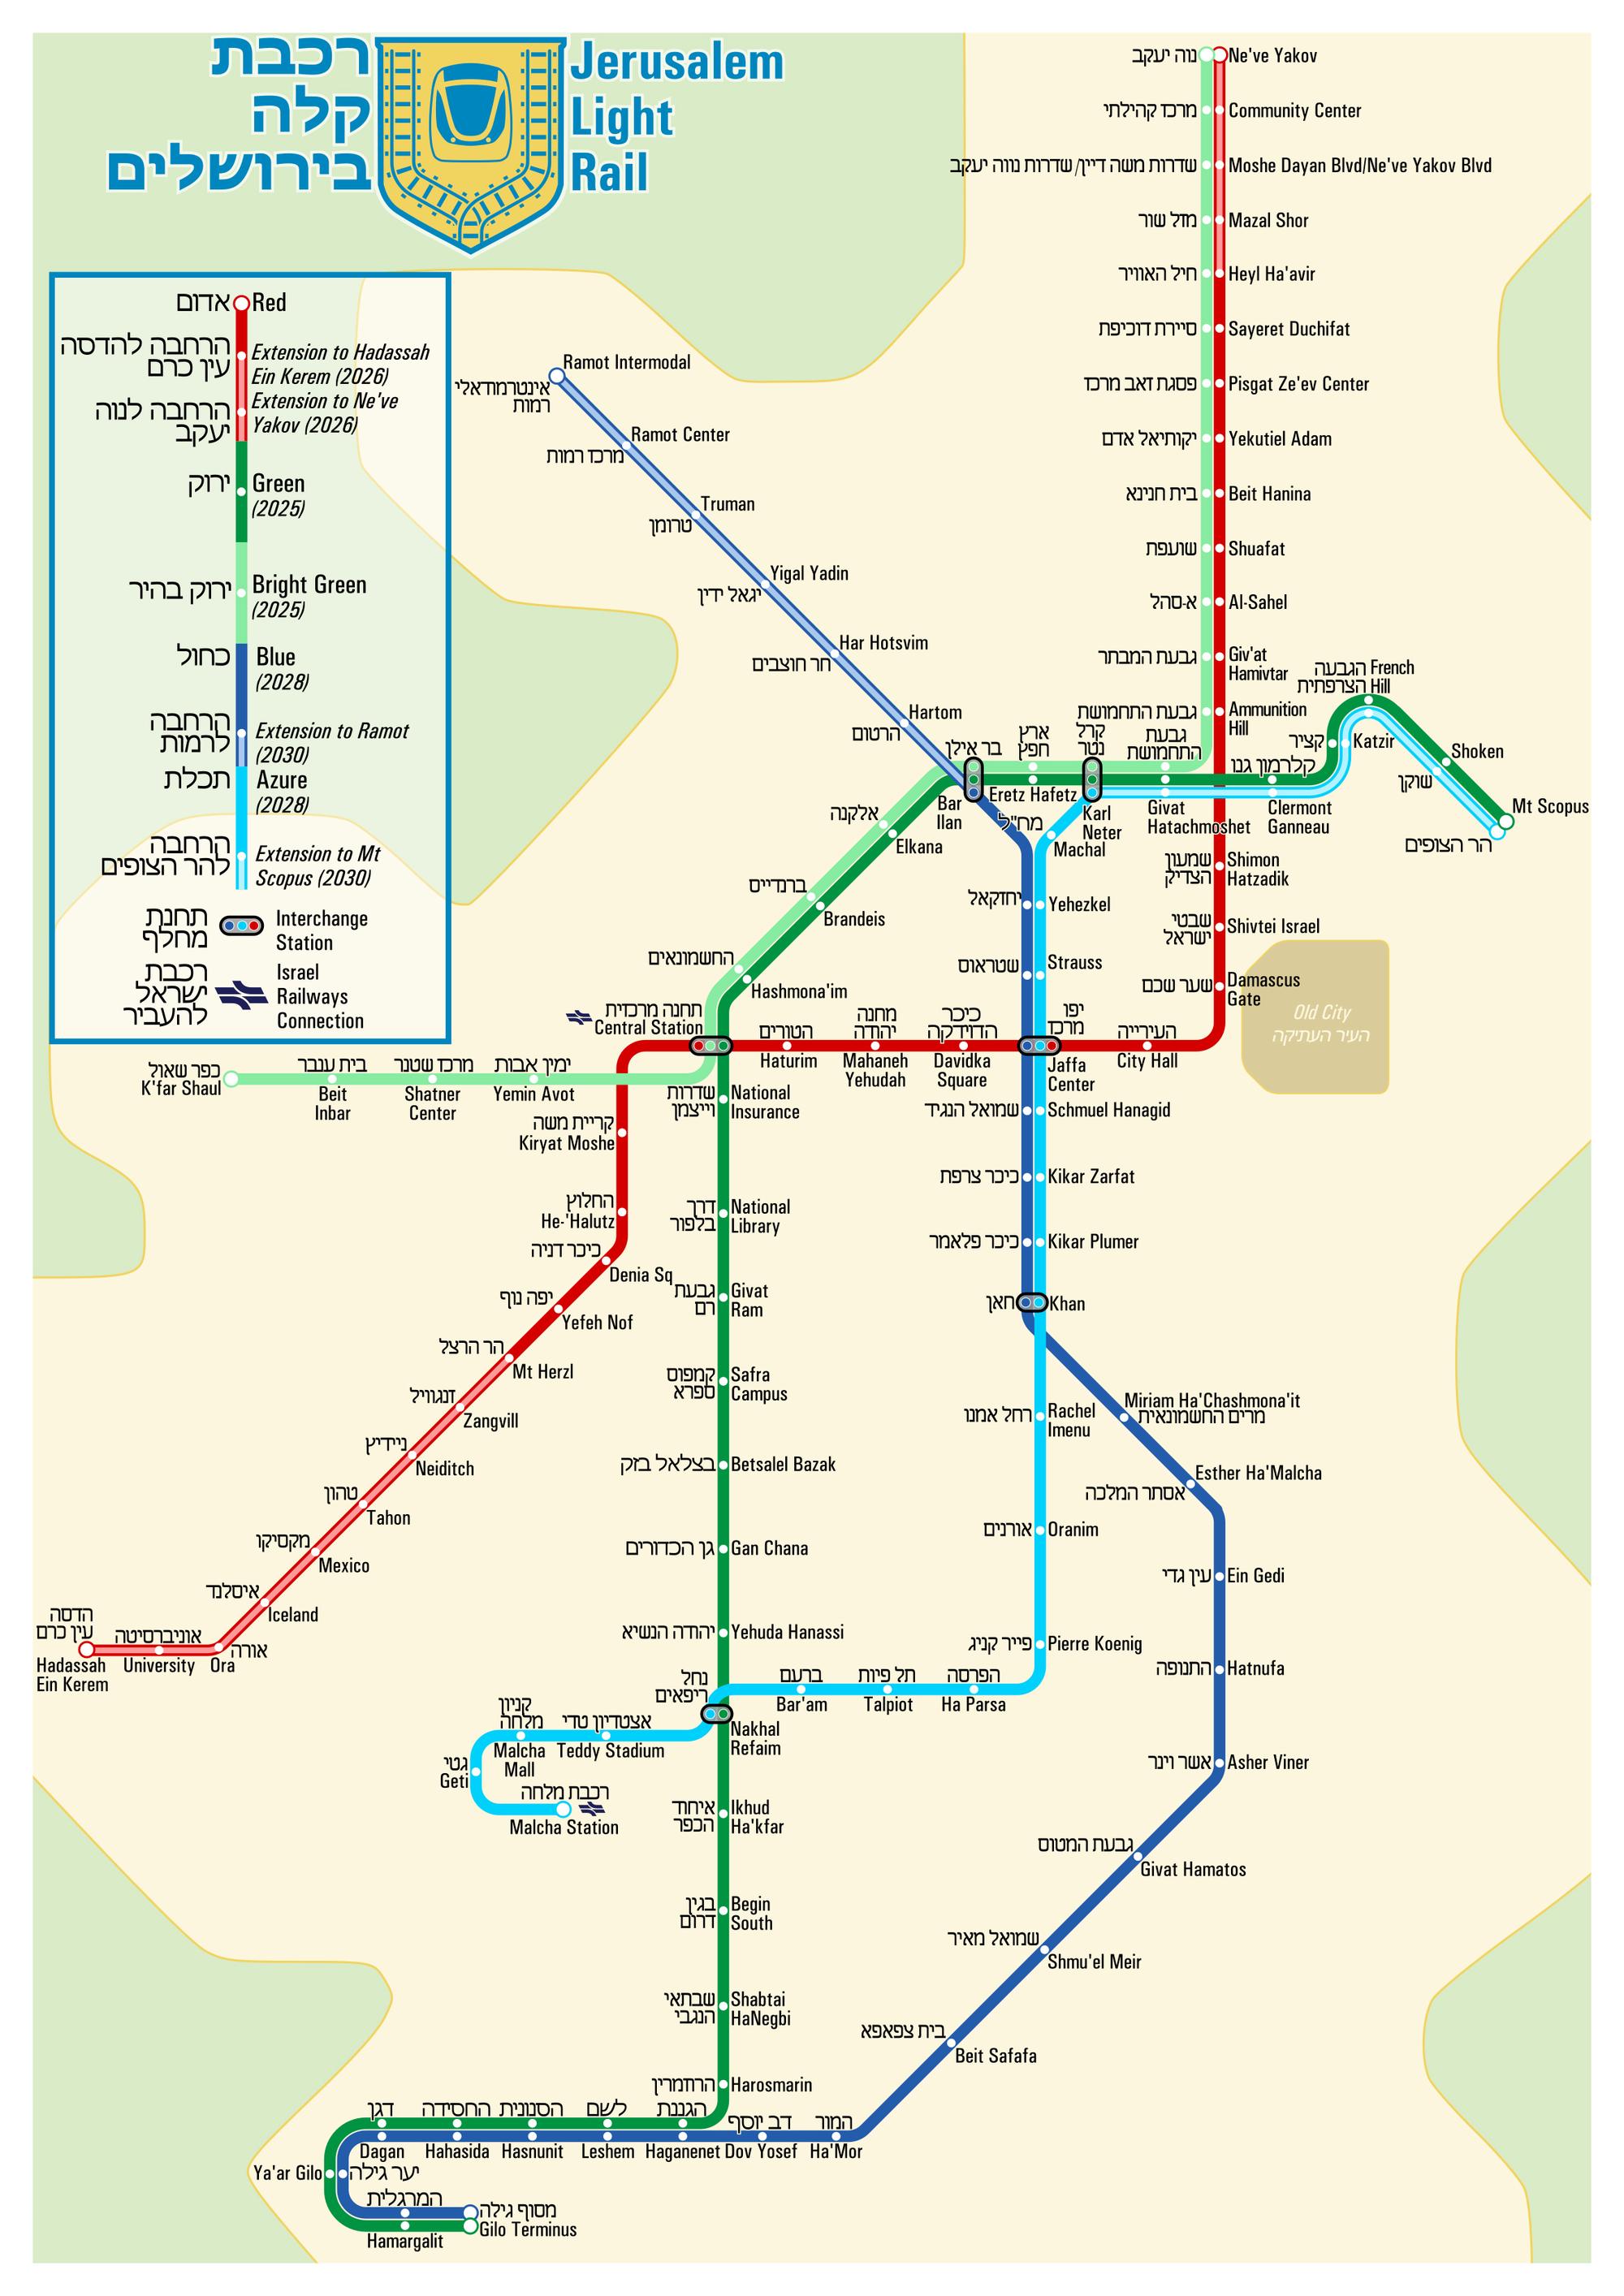 Mapa de la red de tren ligero del gran Jerusalén.